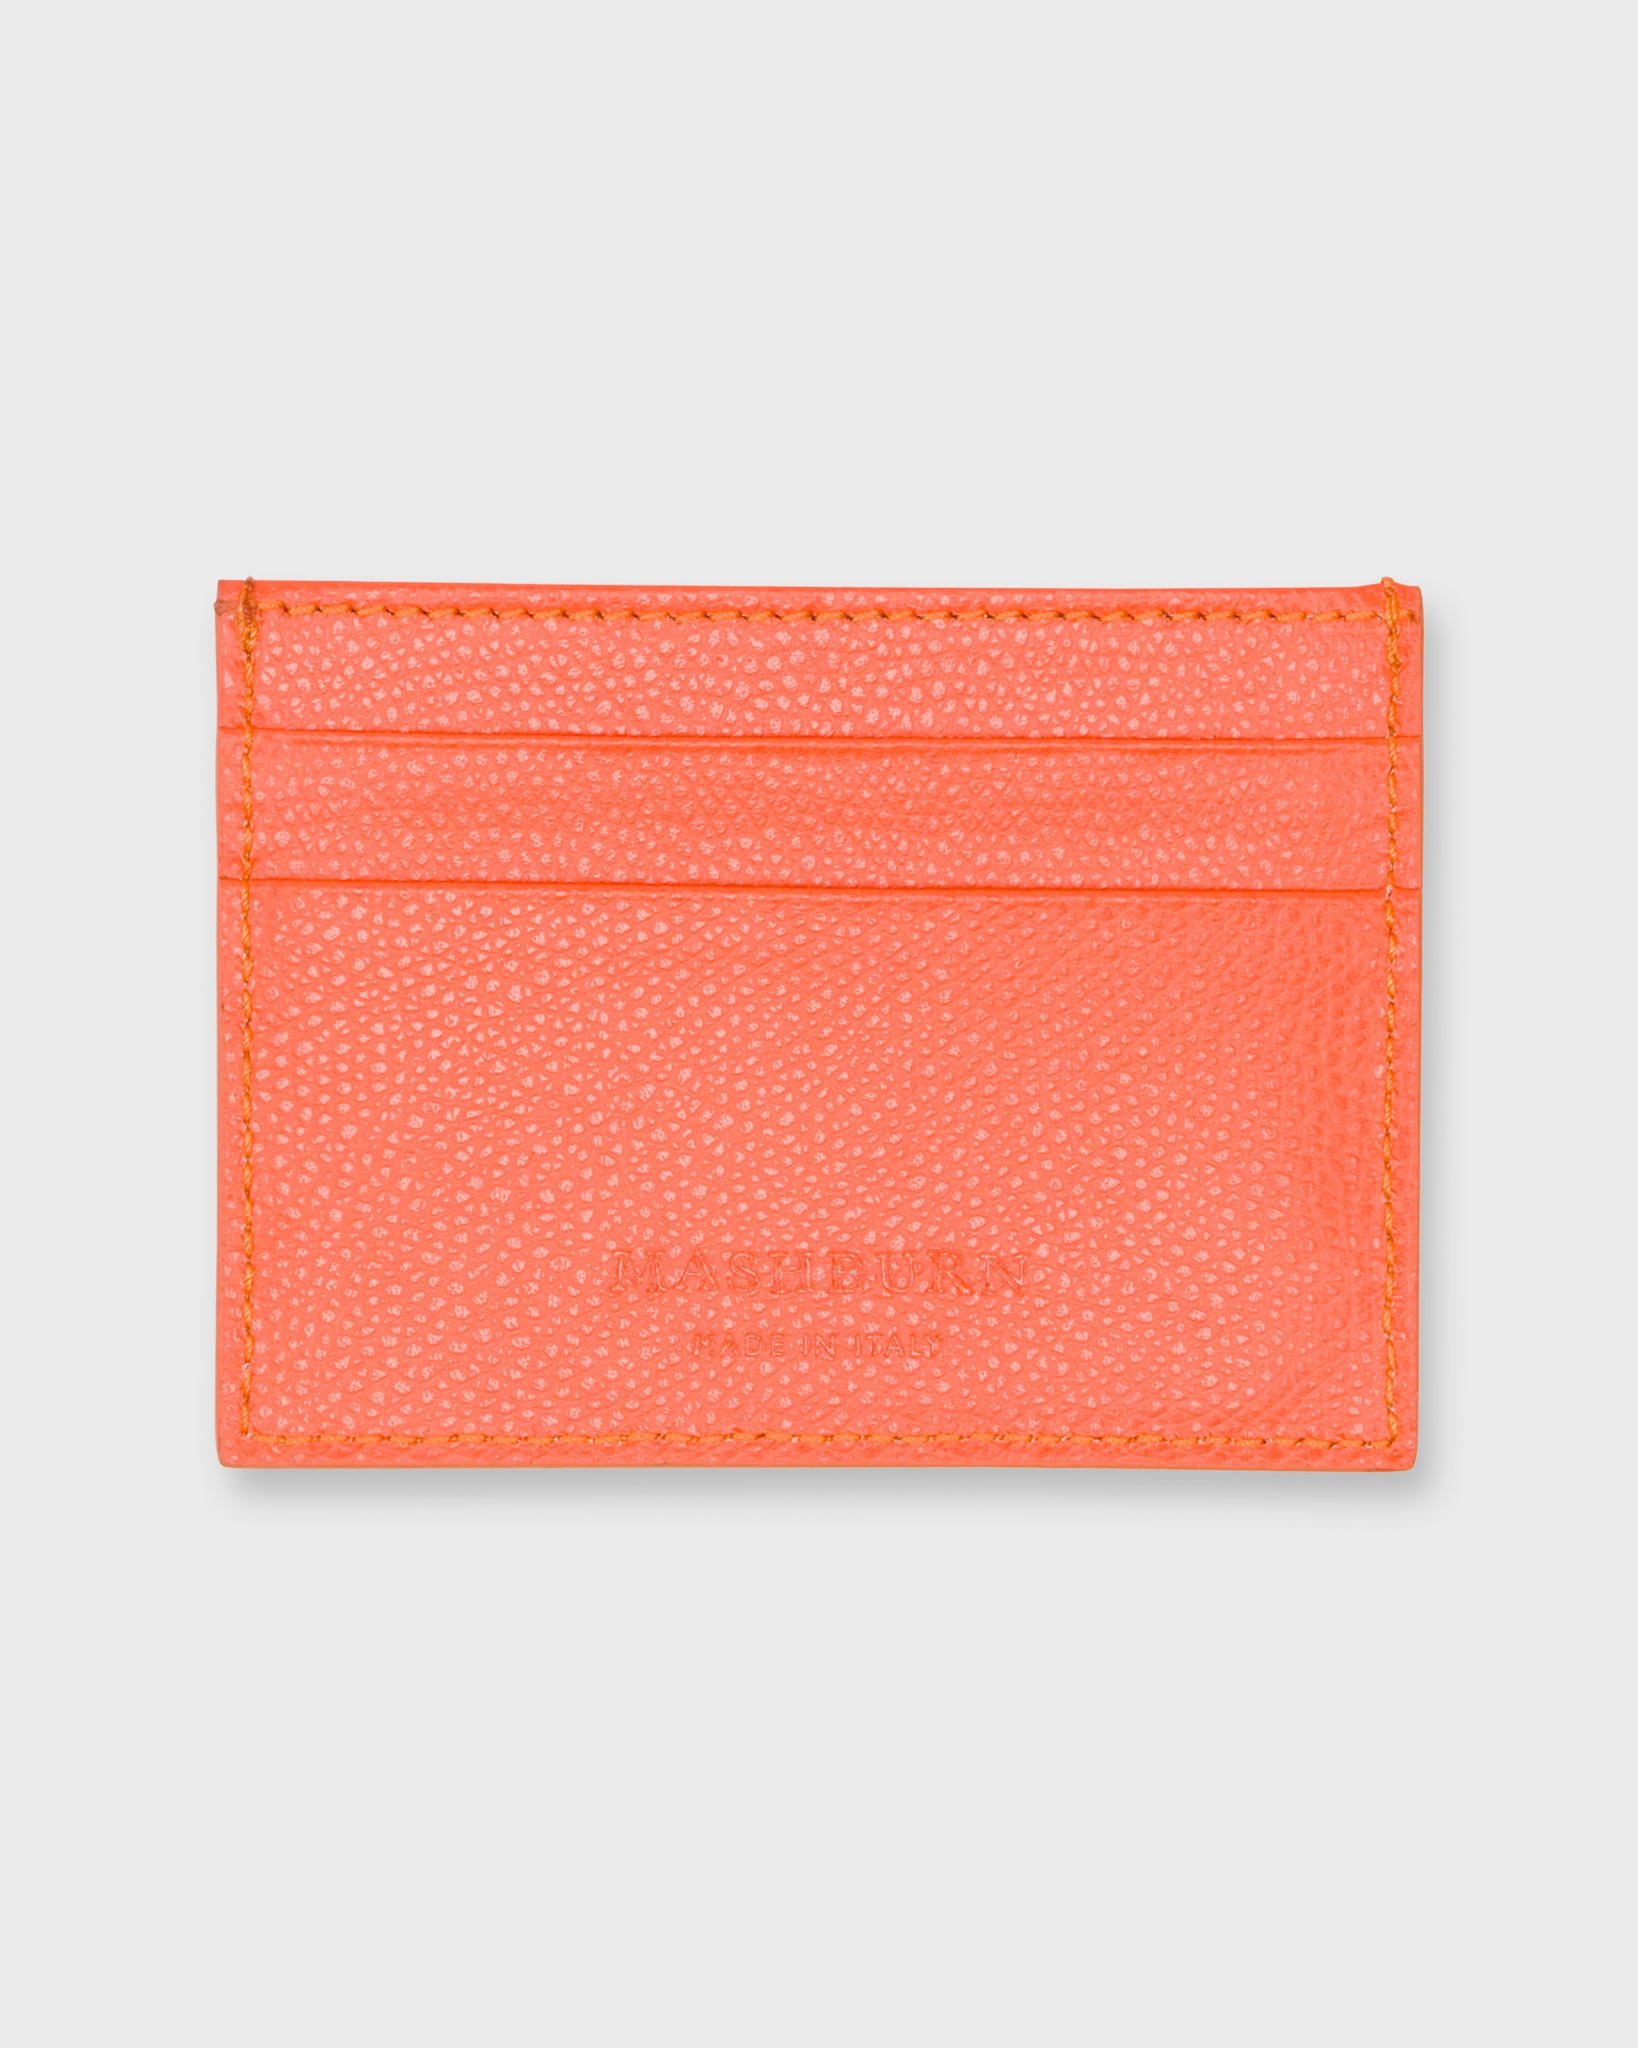 Card Holder in Orange Leather